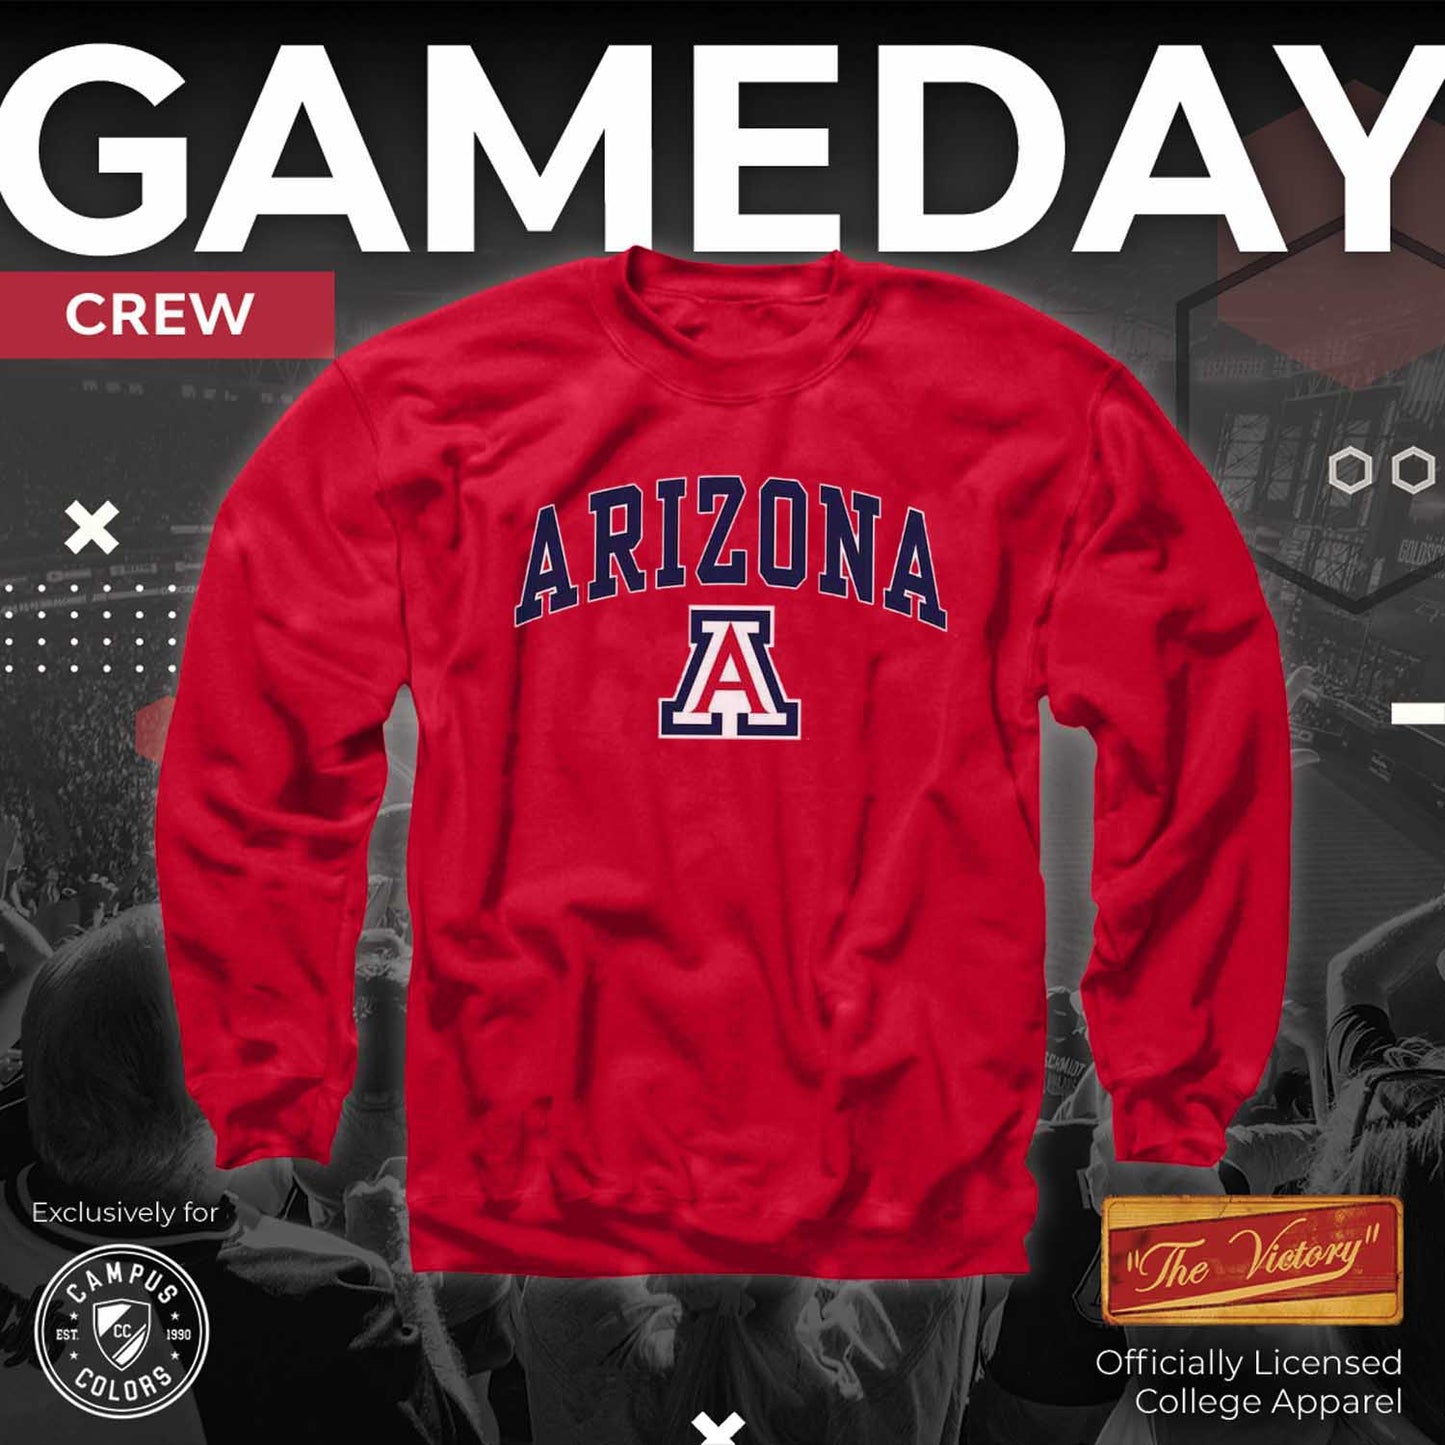 Arizona Wildcats Adult Arch & Logo Soft Style Gameday Crewneck Sweatshirt - Red